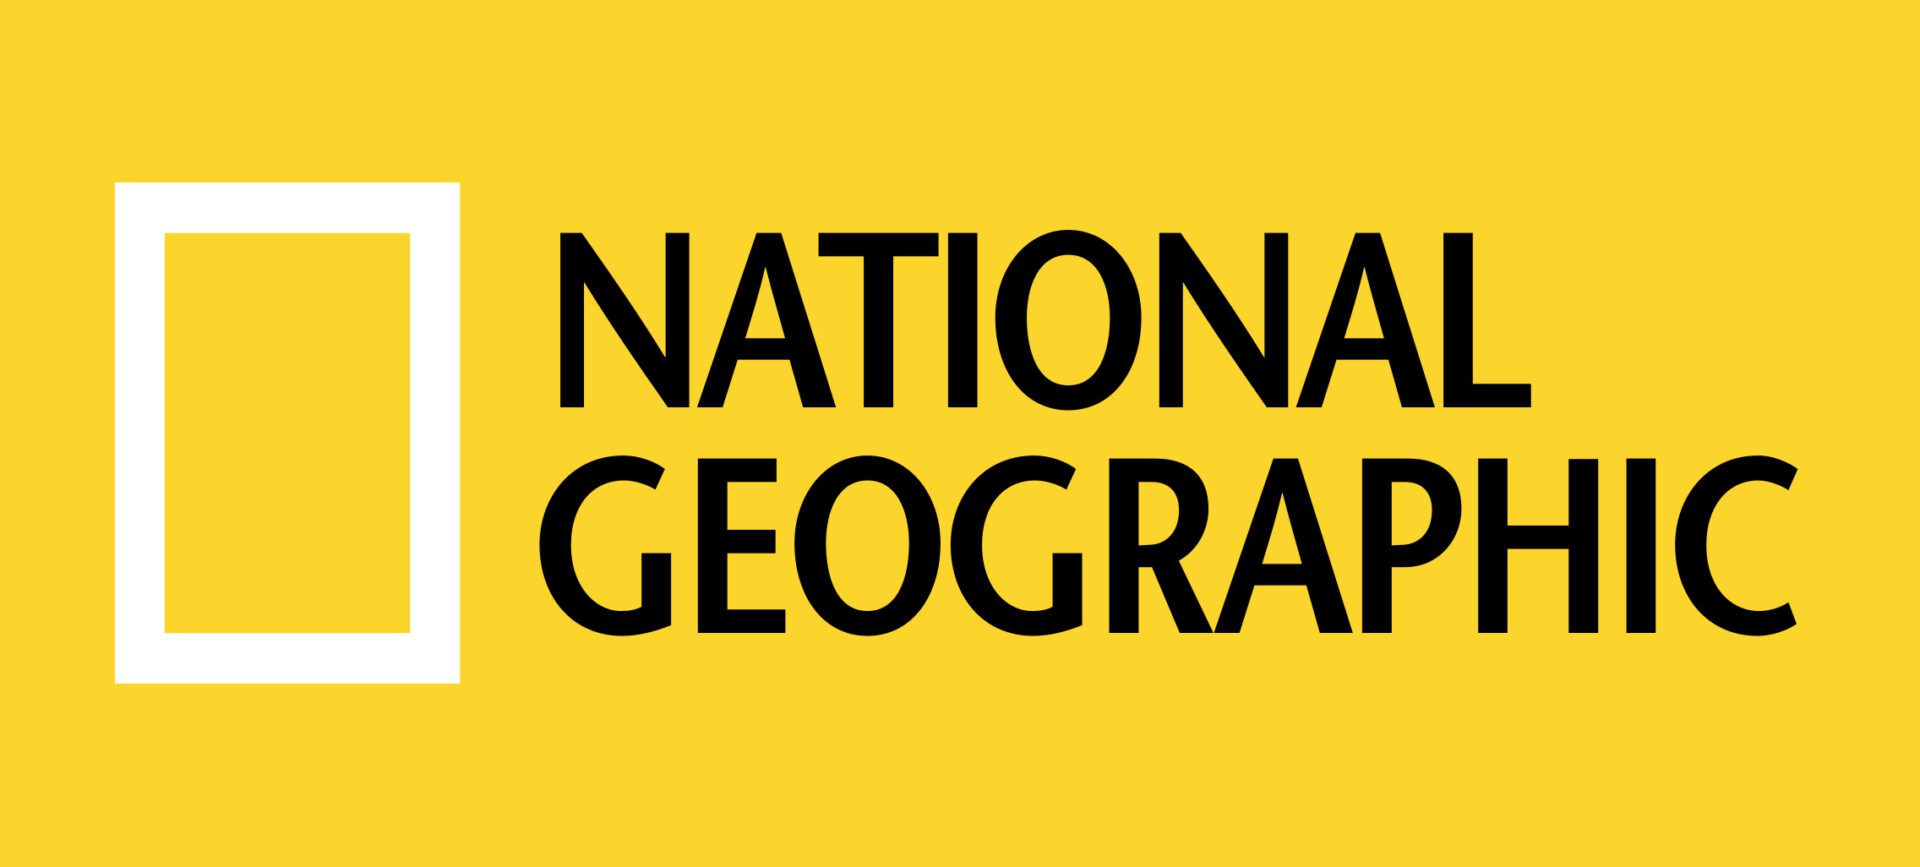 national-geographic-symbol